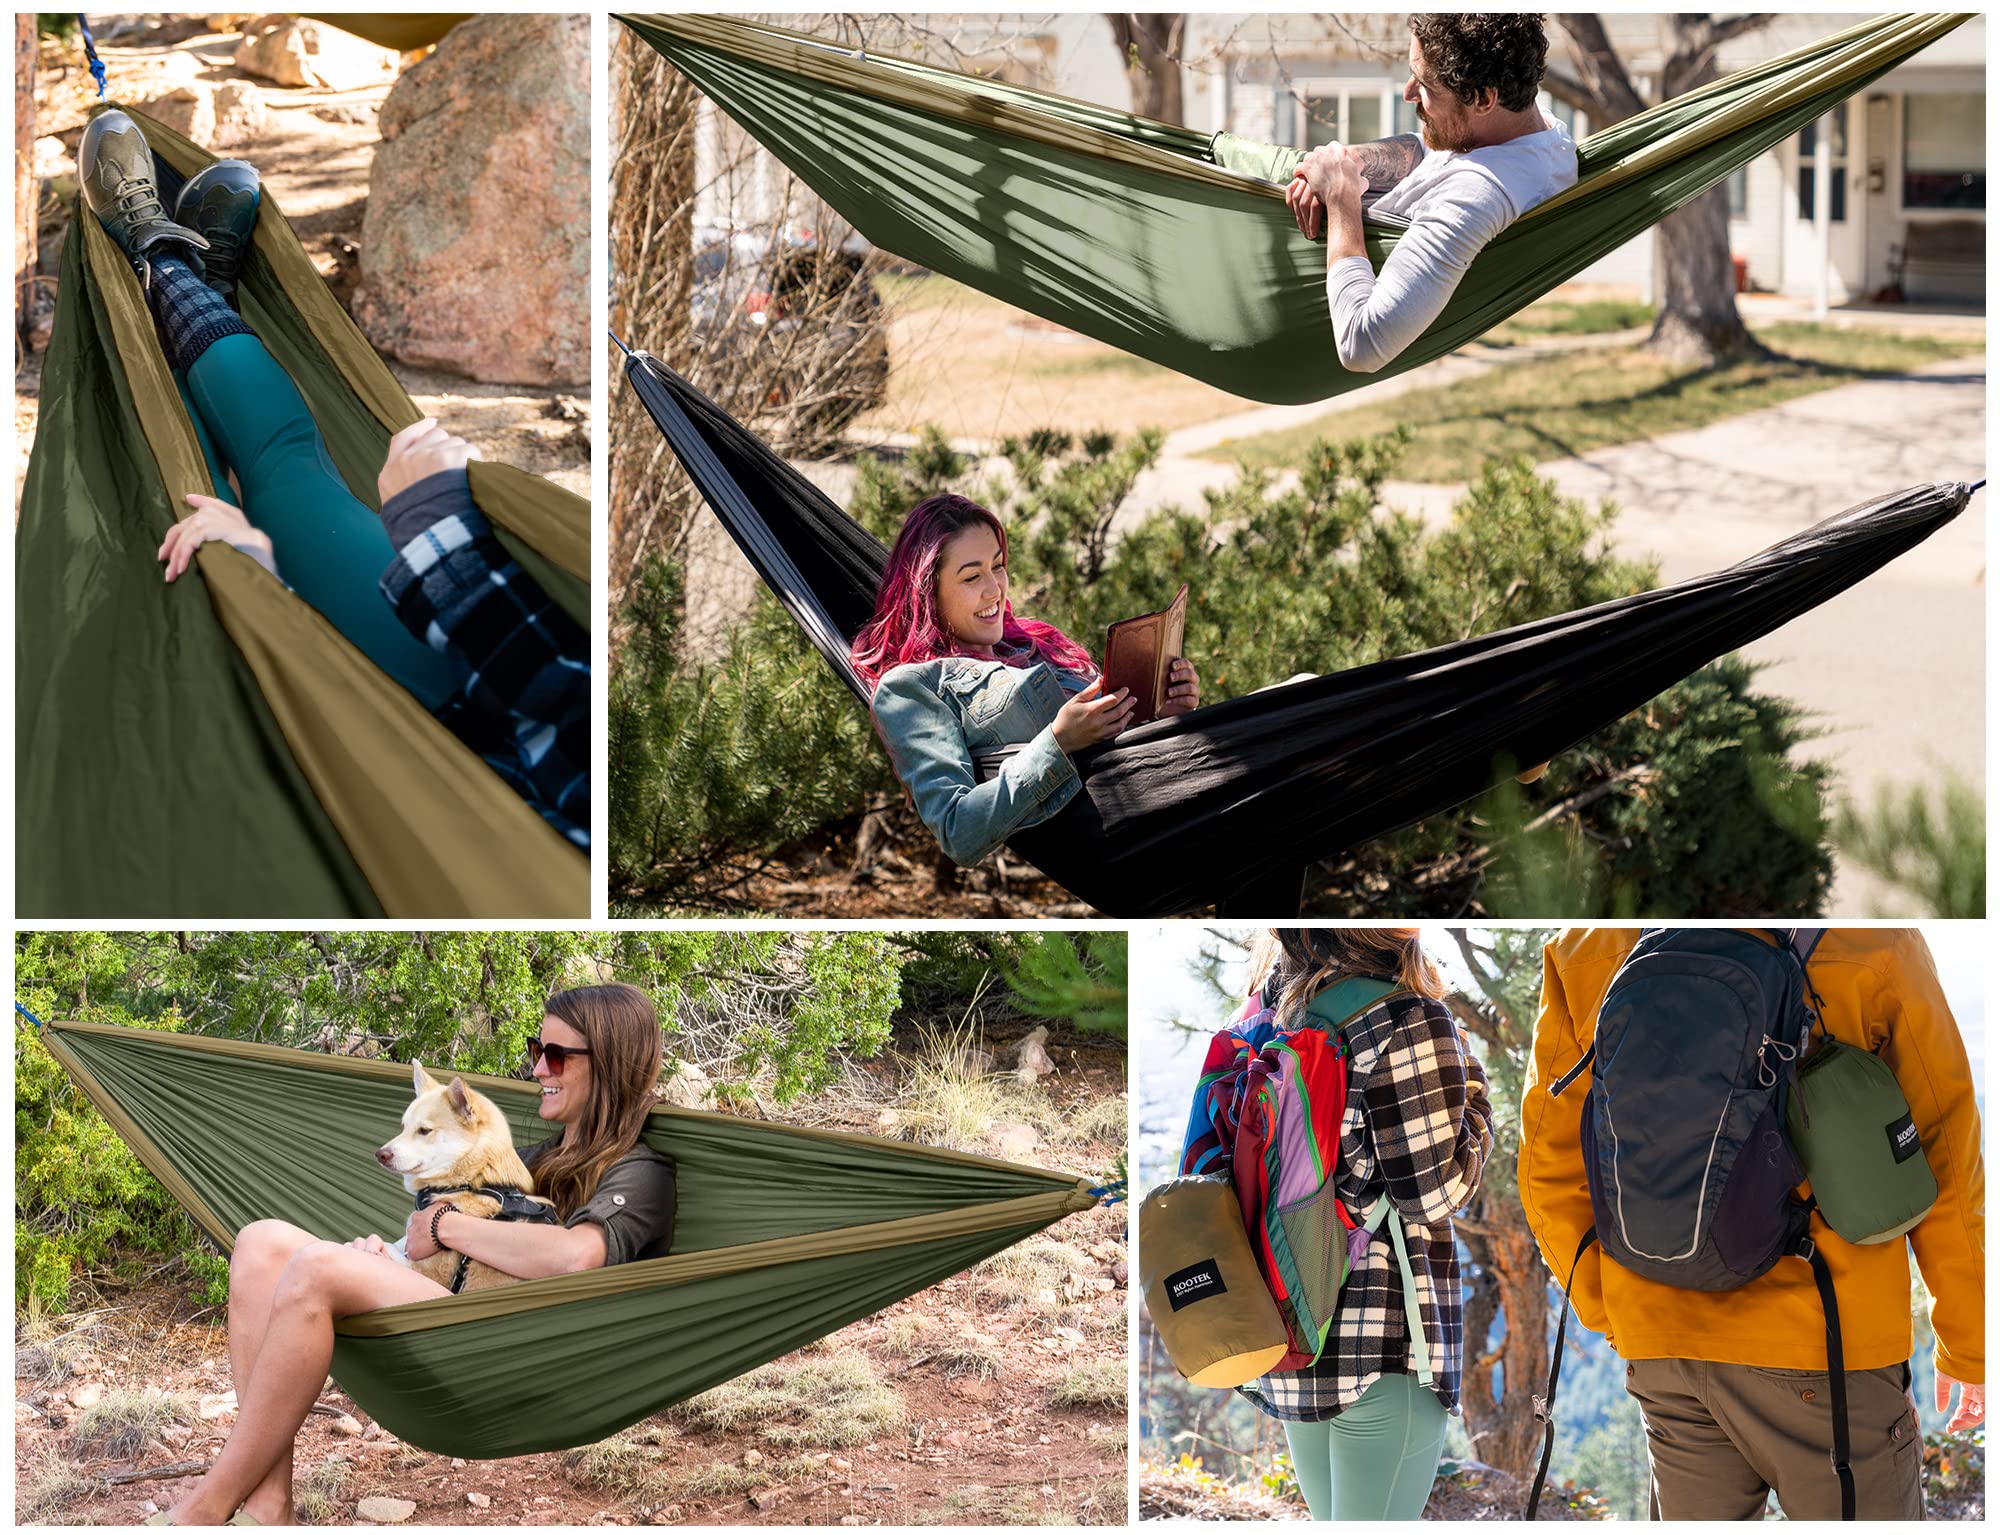 Kootek Camping Hammock Double Portable Hammocks with 2 Tree Straps, Lightweight Nylon Parachute Hammocks for Backpacking, Travel, Beach, Backyard, Patio, Hiking (Olive & Dark Khaki, Large)